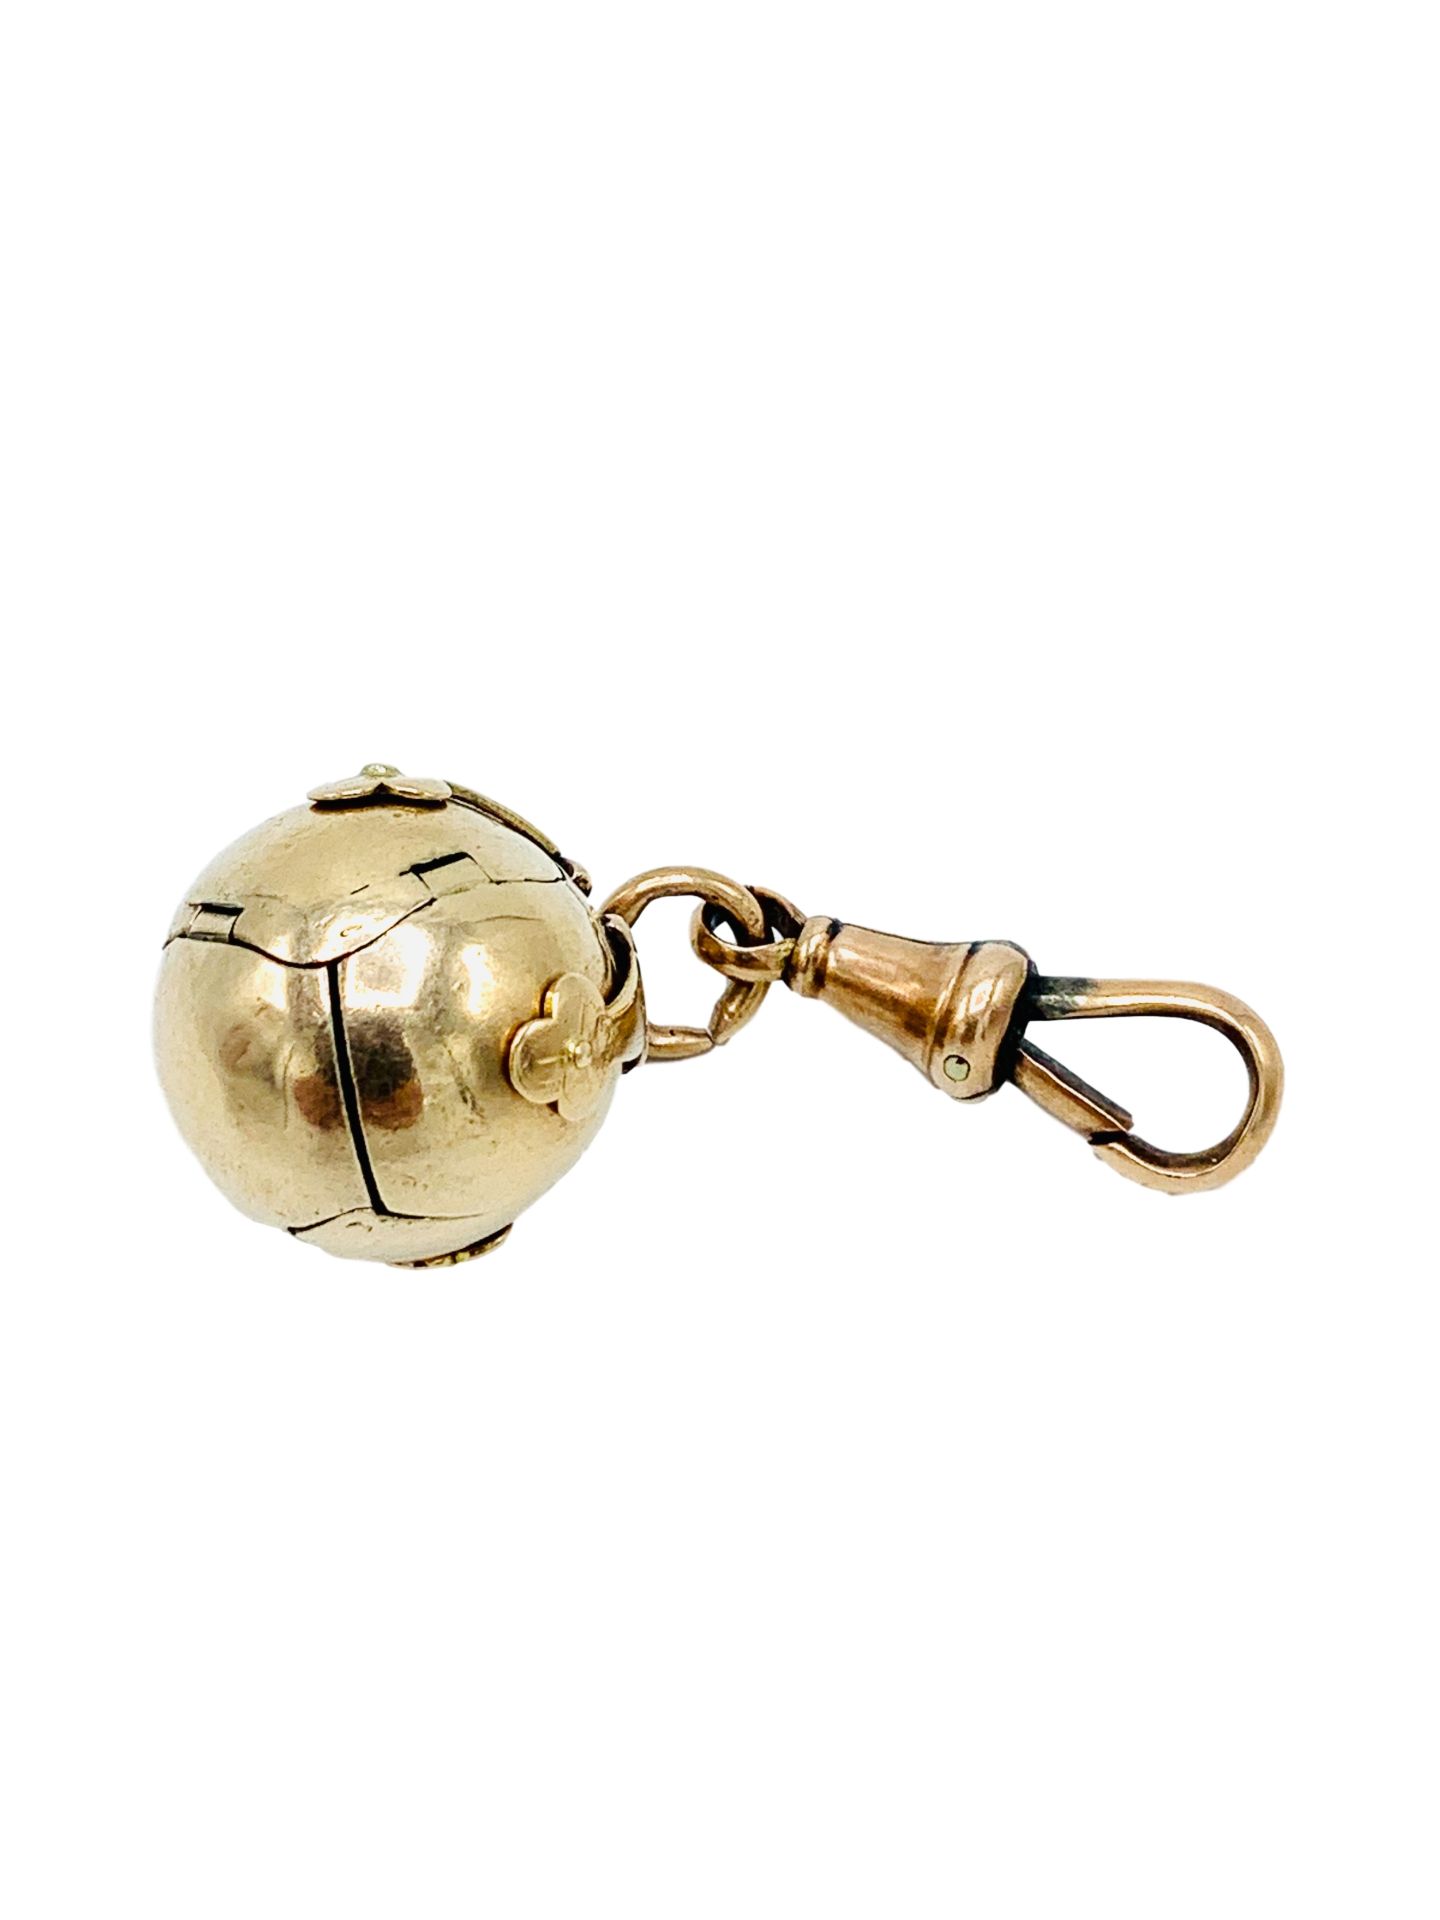 9ct gold Masonic folding orb pendant.